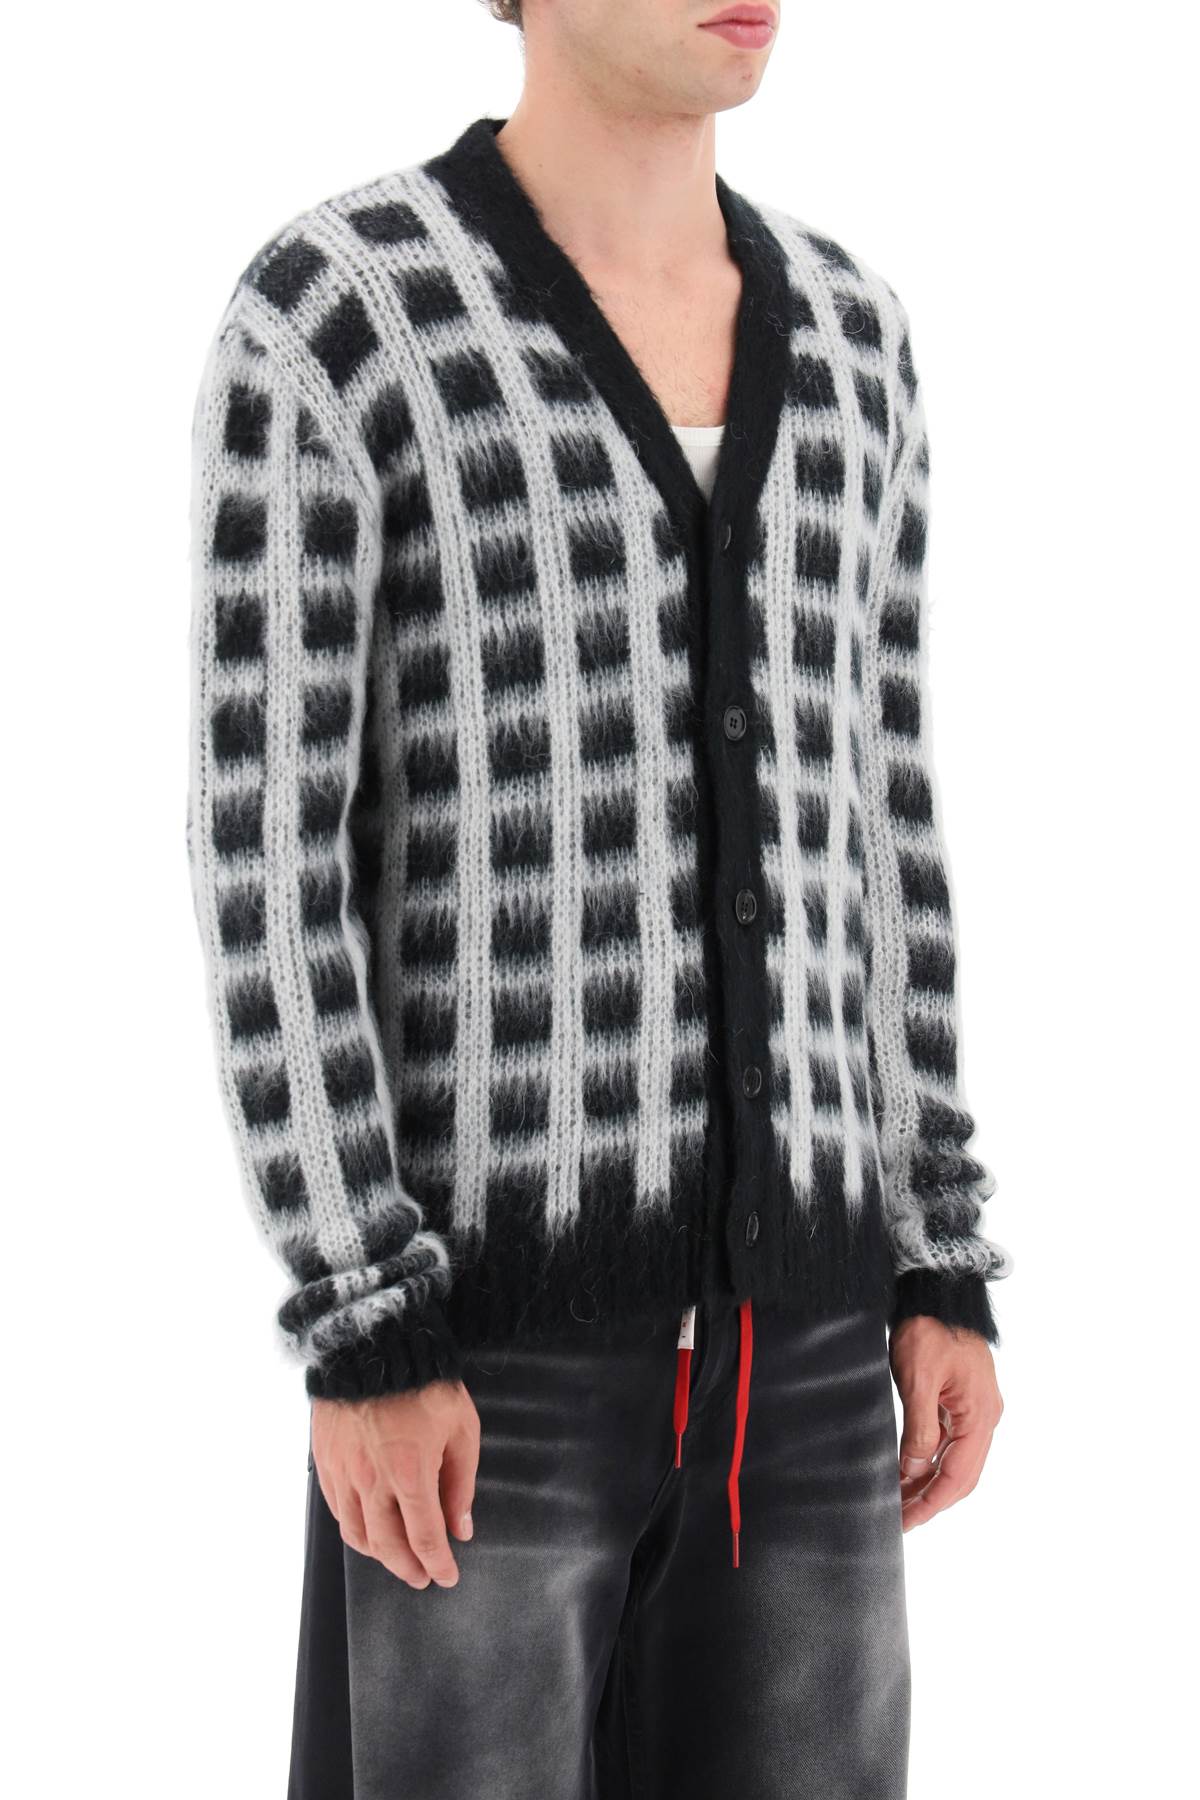 Marni brushed-yarn cardigan with check pattern-1